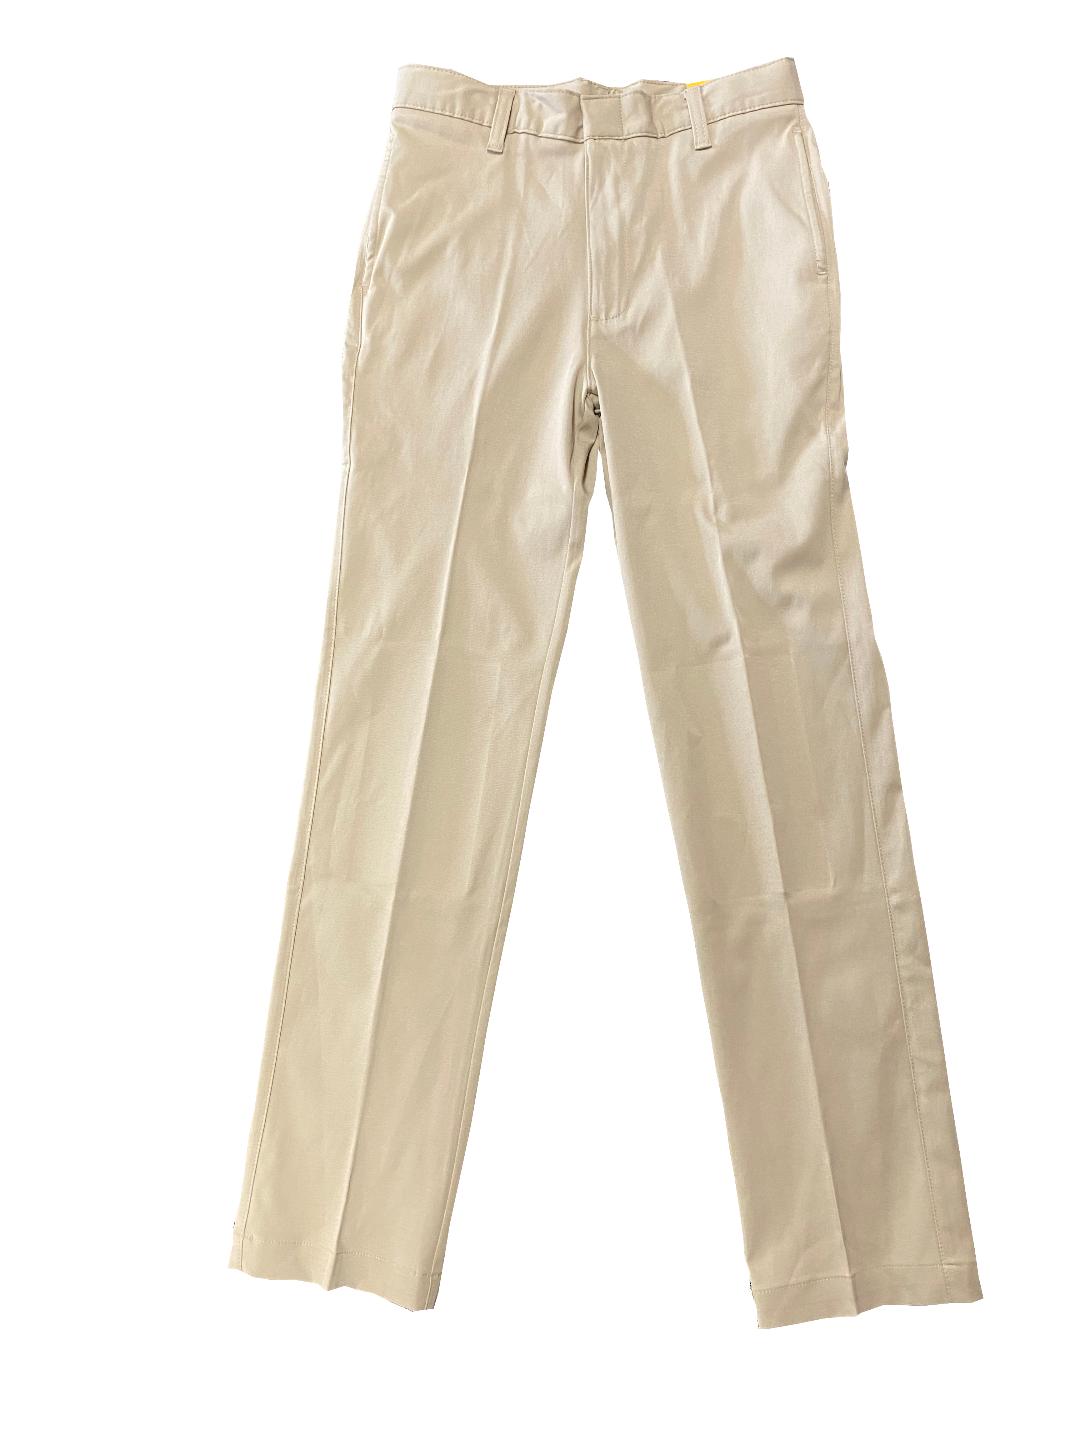 Boys Performance Fabric Flat Front Pants – Khaki – Fischers School Uniforms